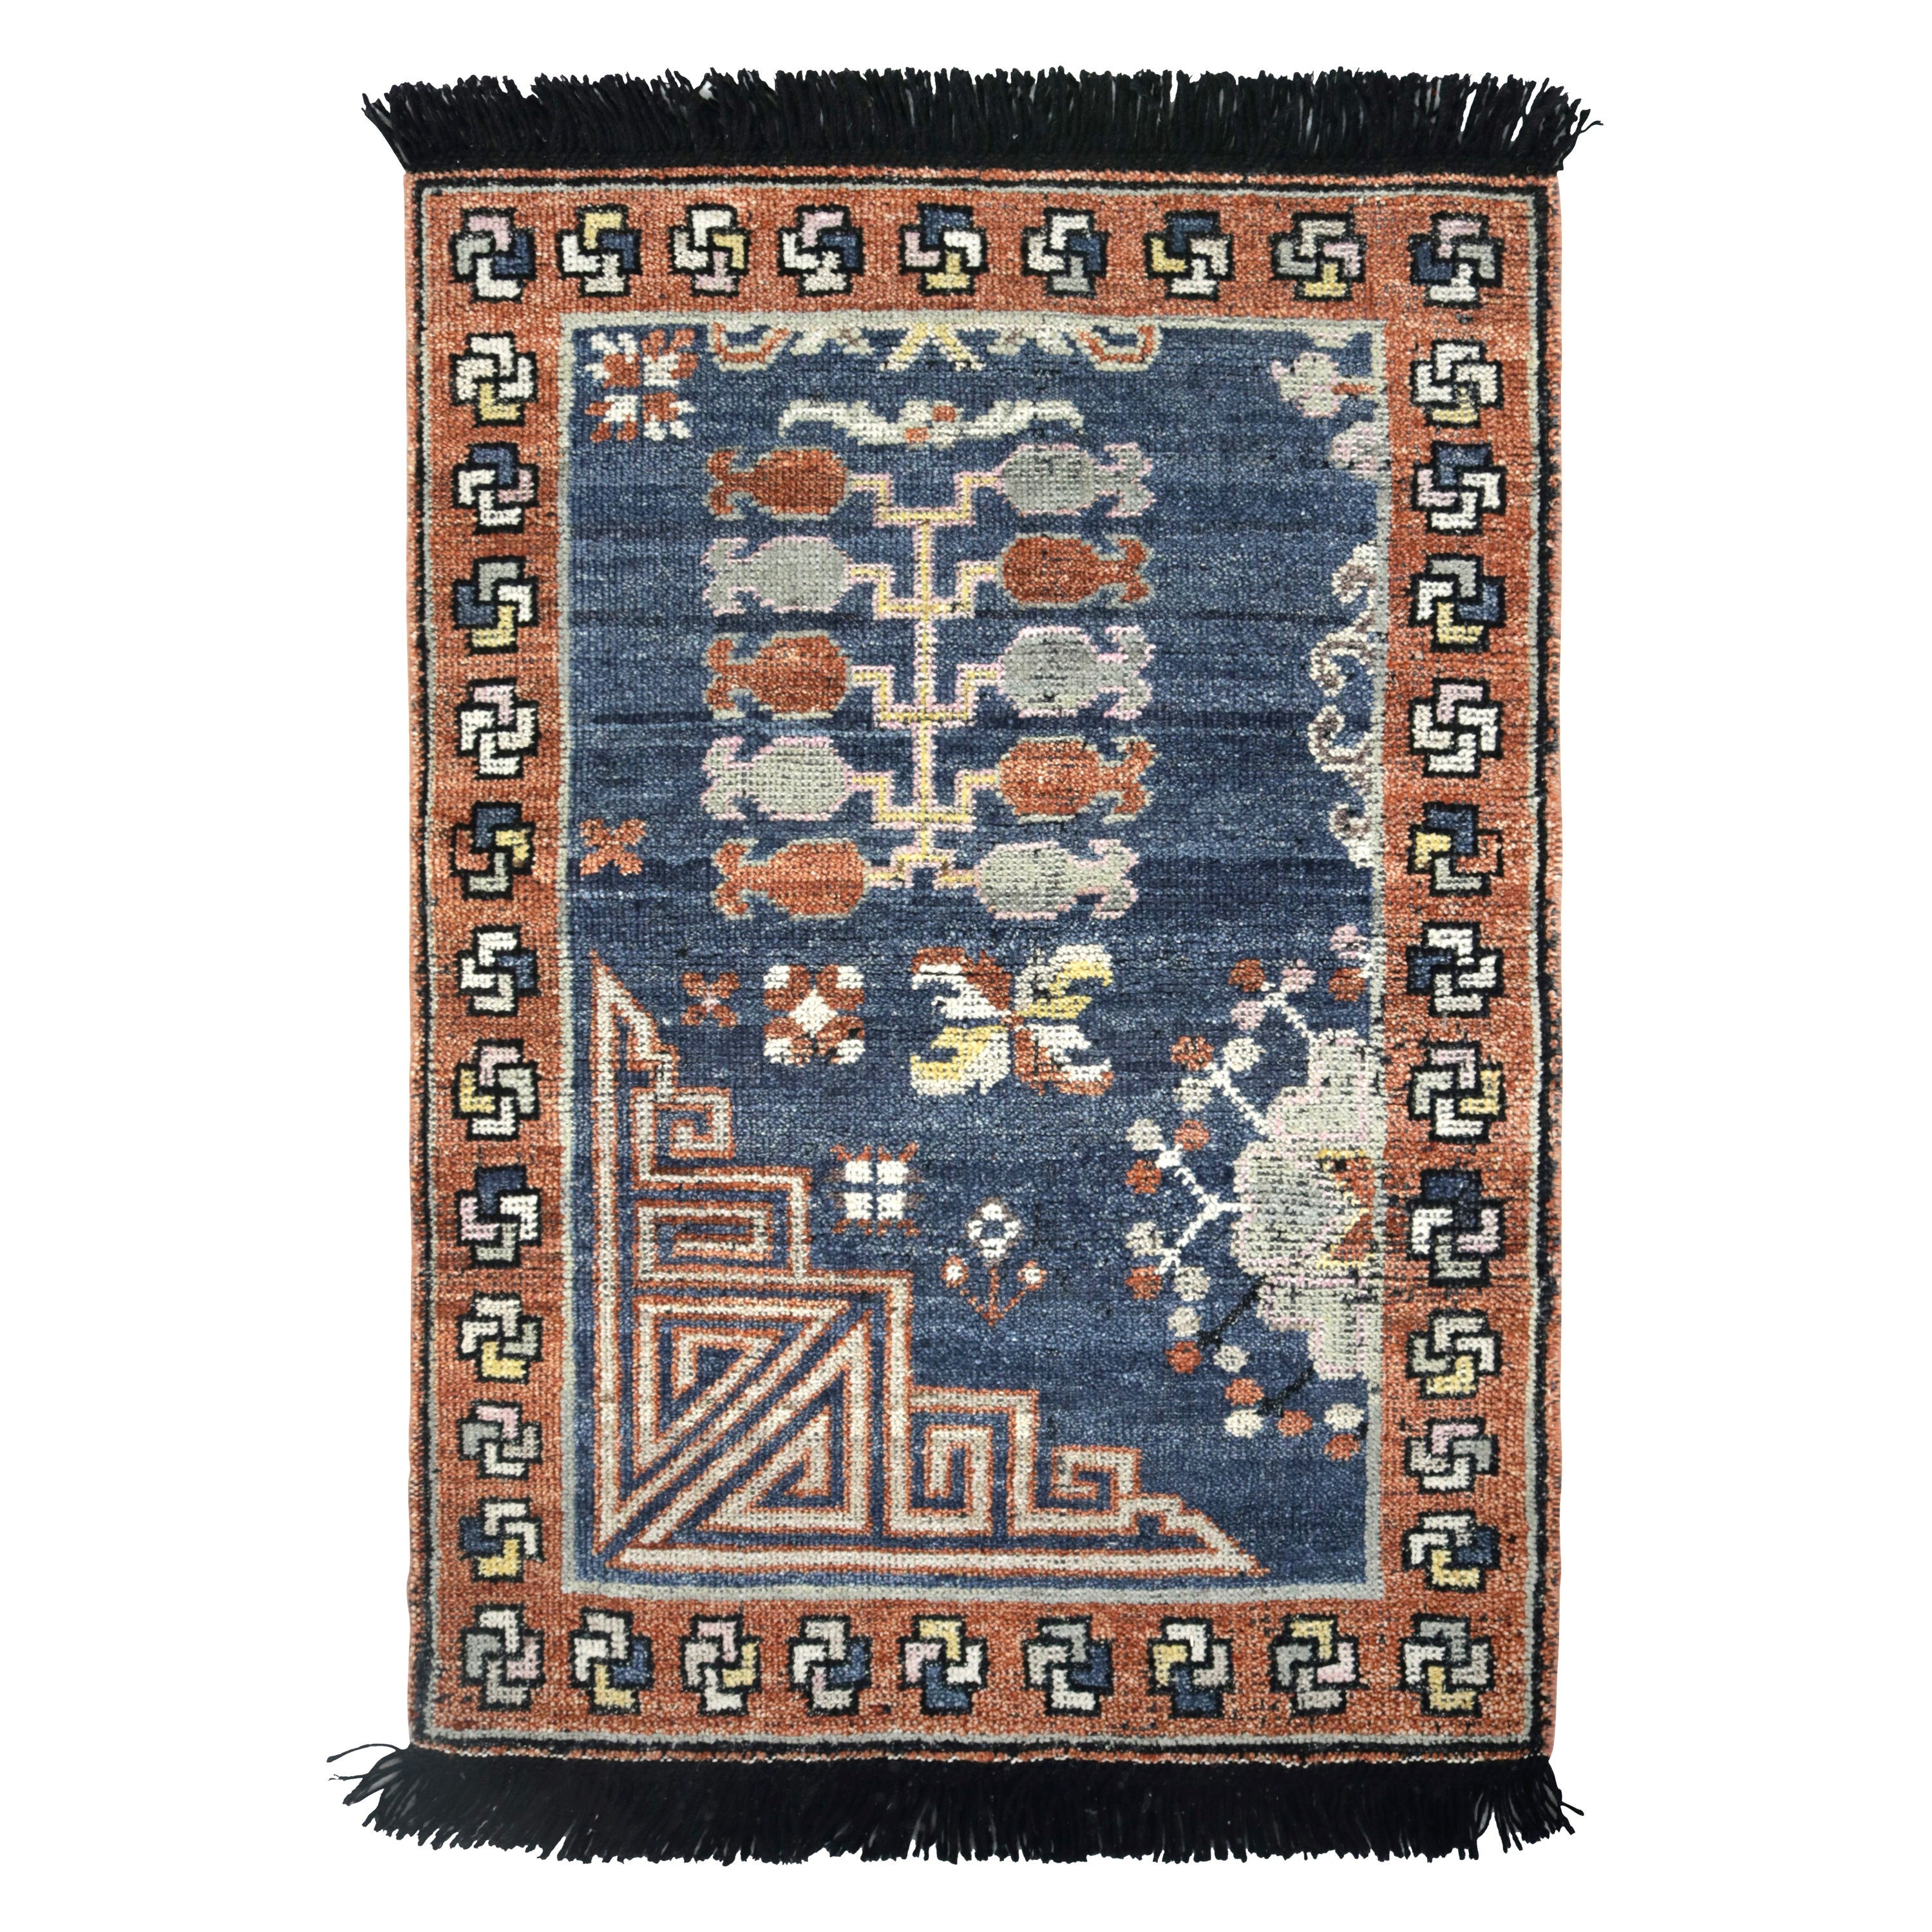 Rug & Kilim’s Khotan inspired rug in Brown & Blue Geometric Patterns